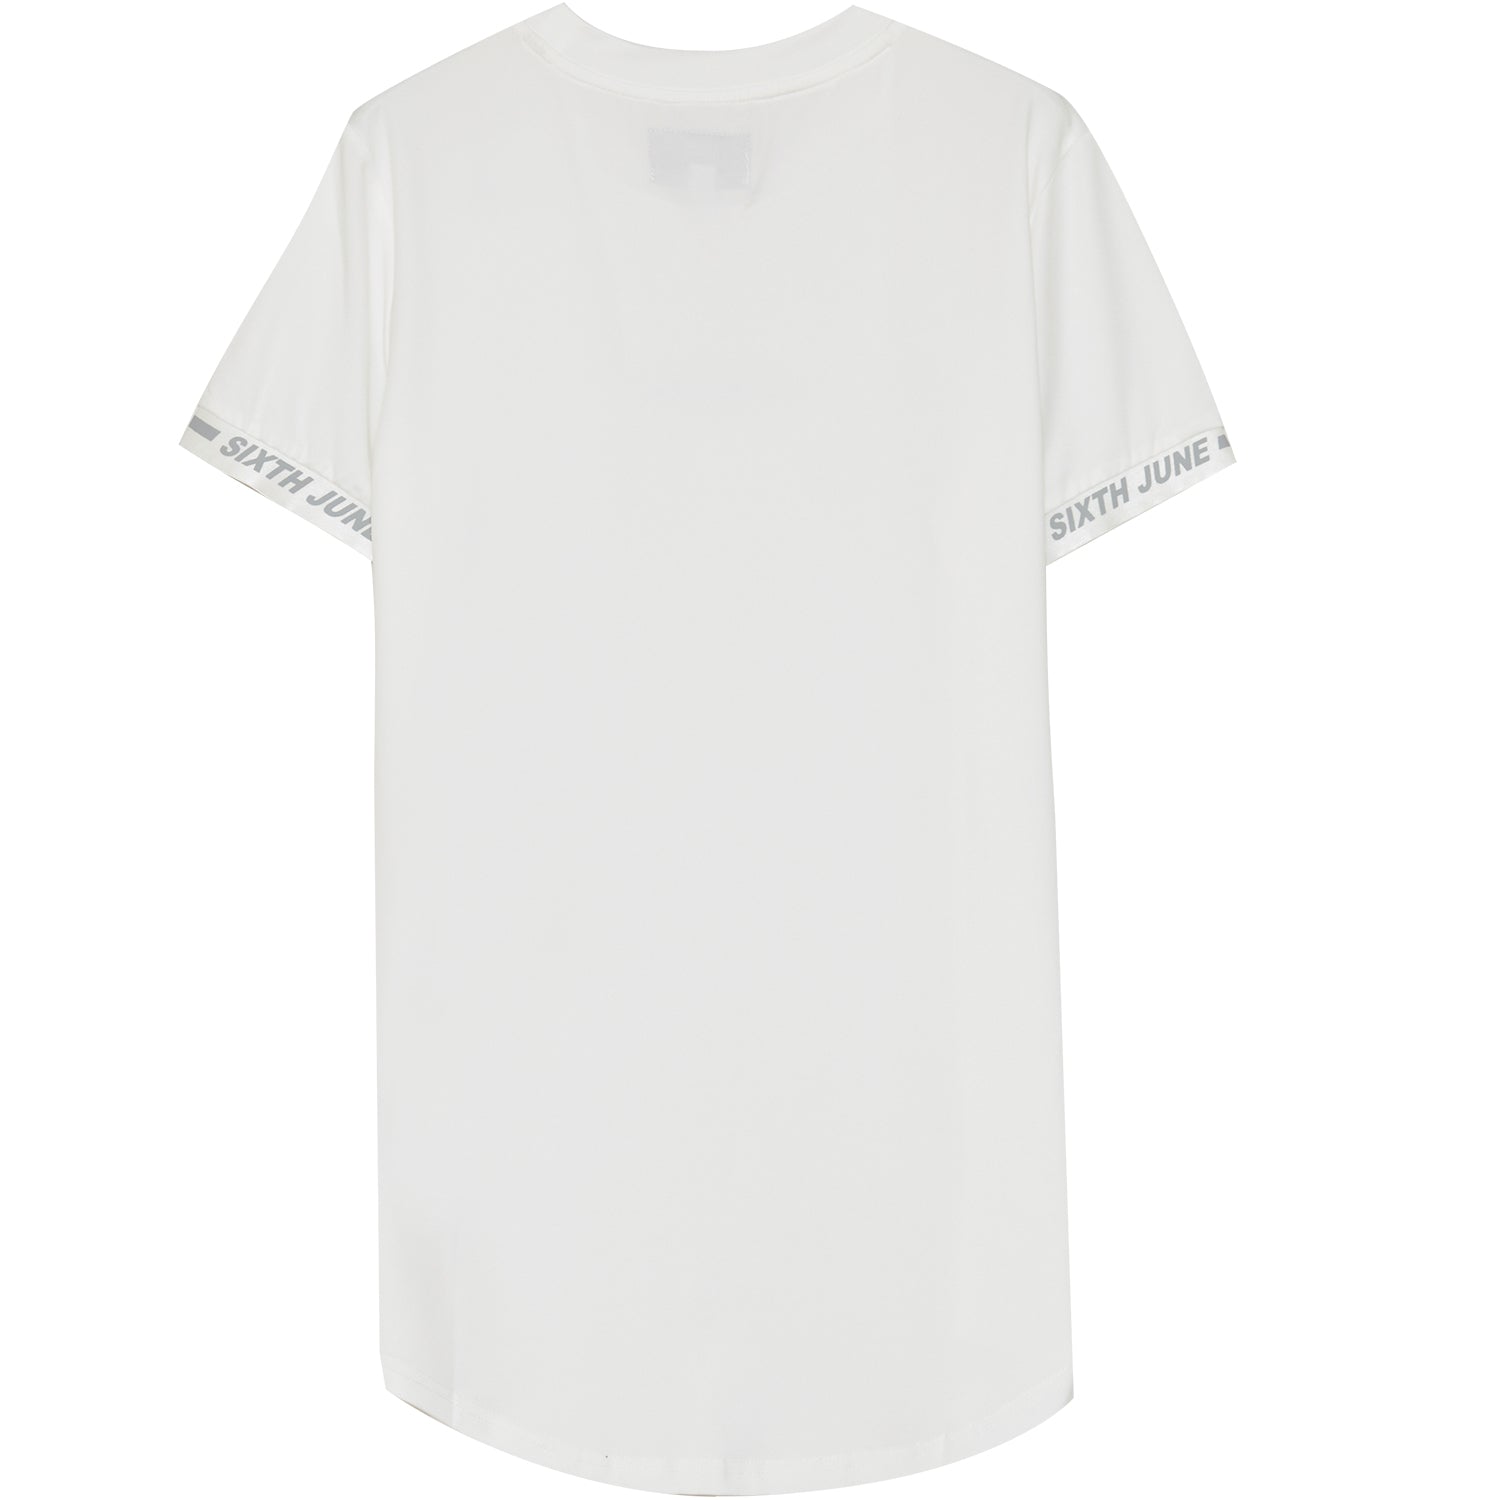 Sixth June - T-shirt maillot logo manche blanc